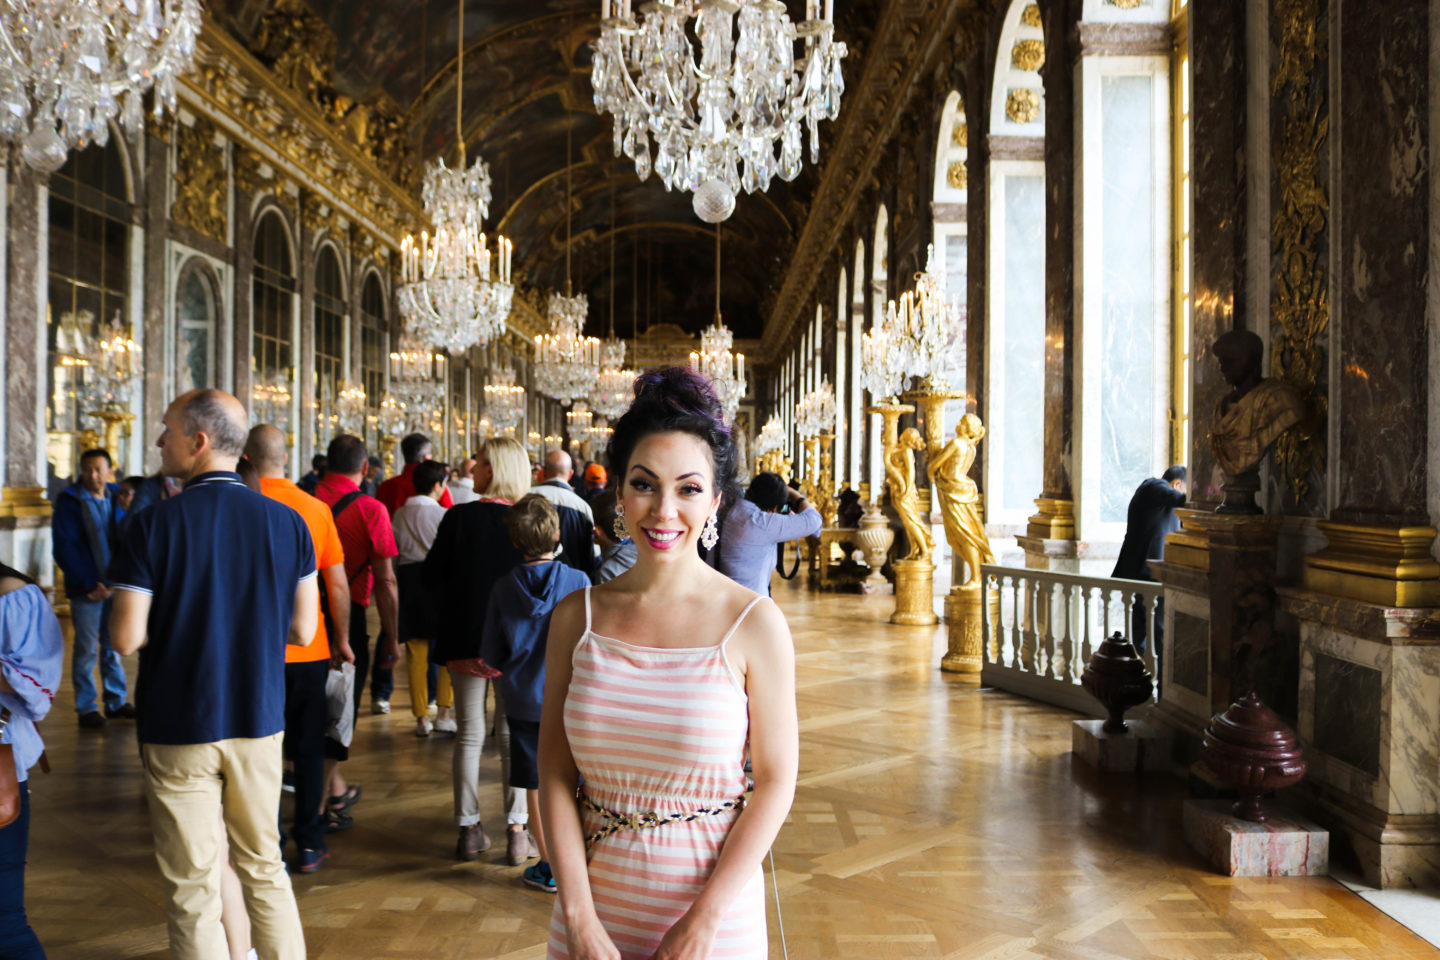 Palace de Versailles